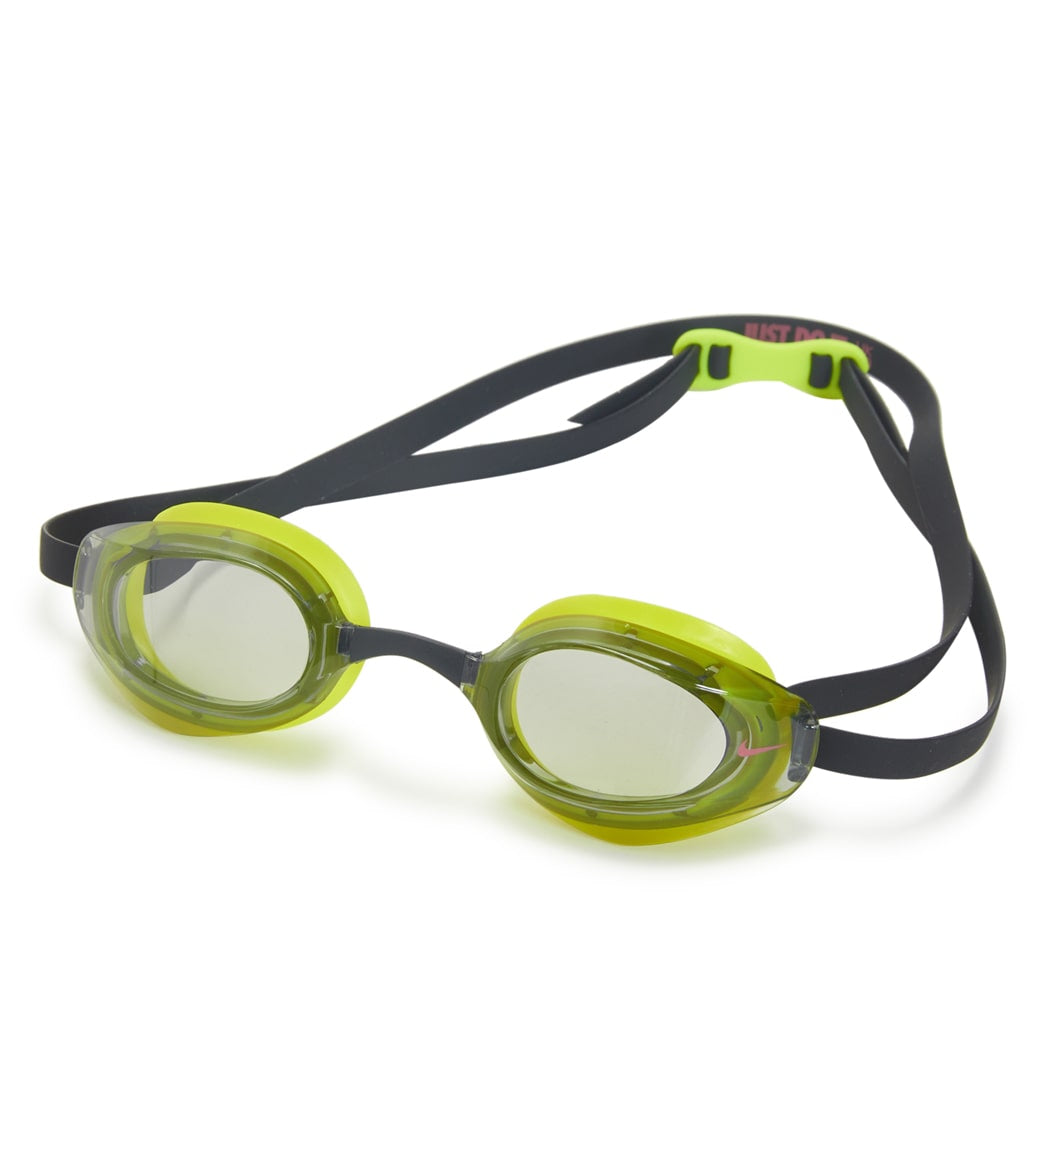 Nike Vapor Mirrored Swim Goggles.